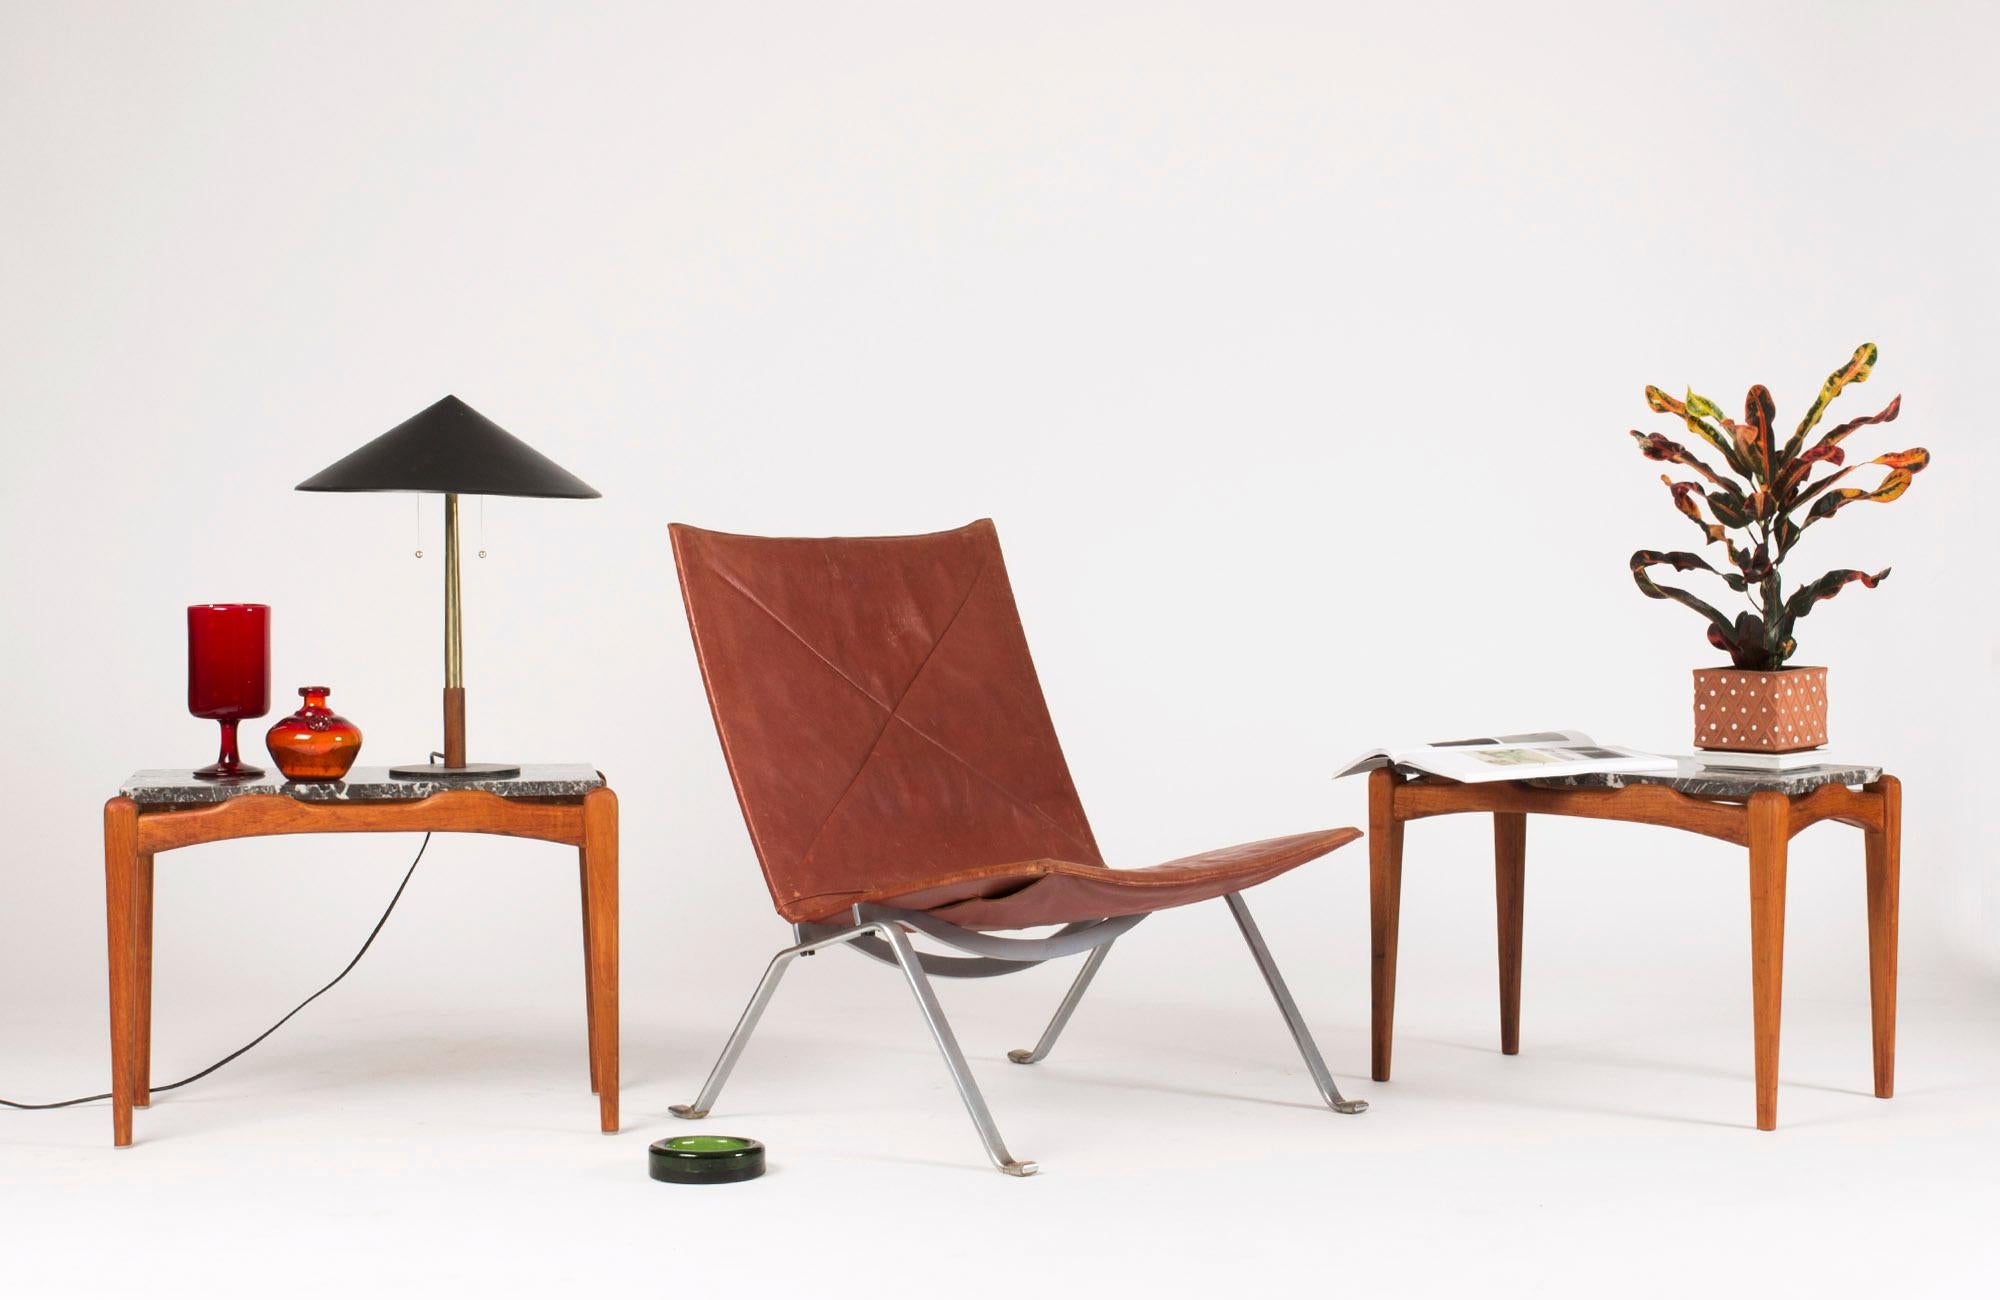 Pair of “Pk 22” Lounge Chairs by Poul Kjaerholm 1